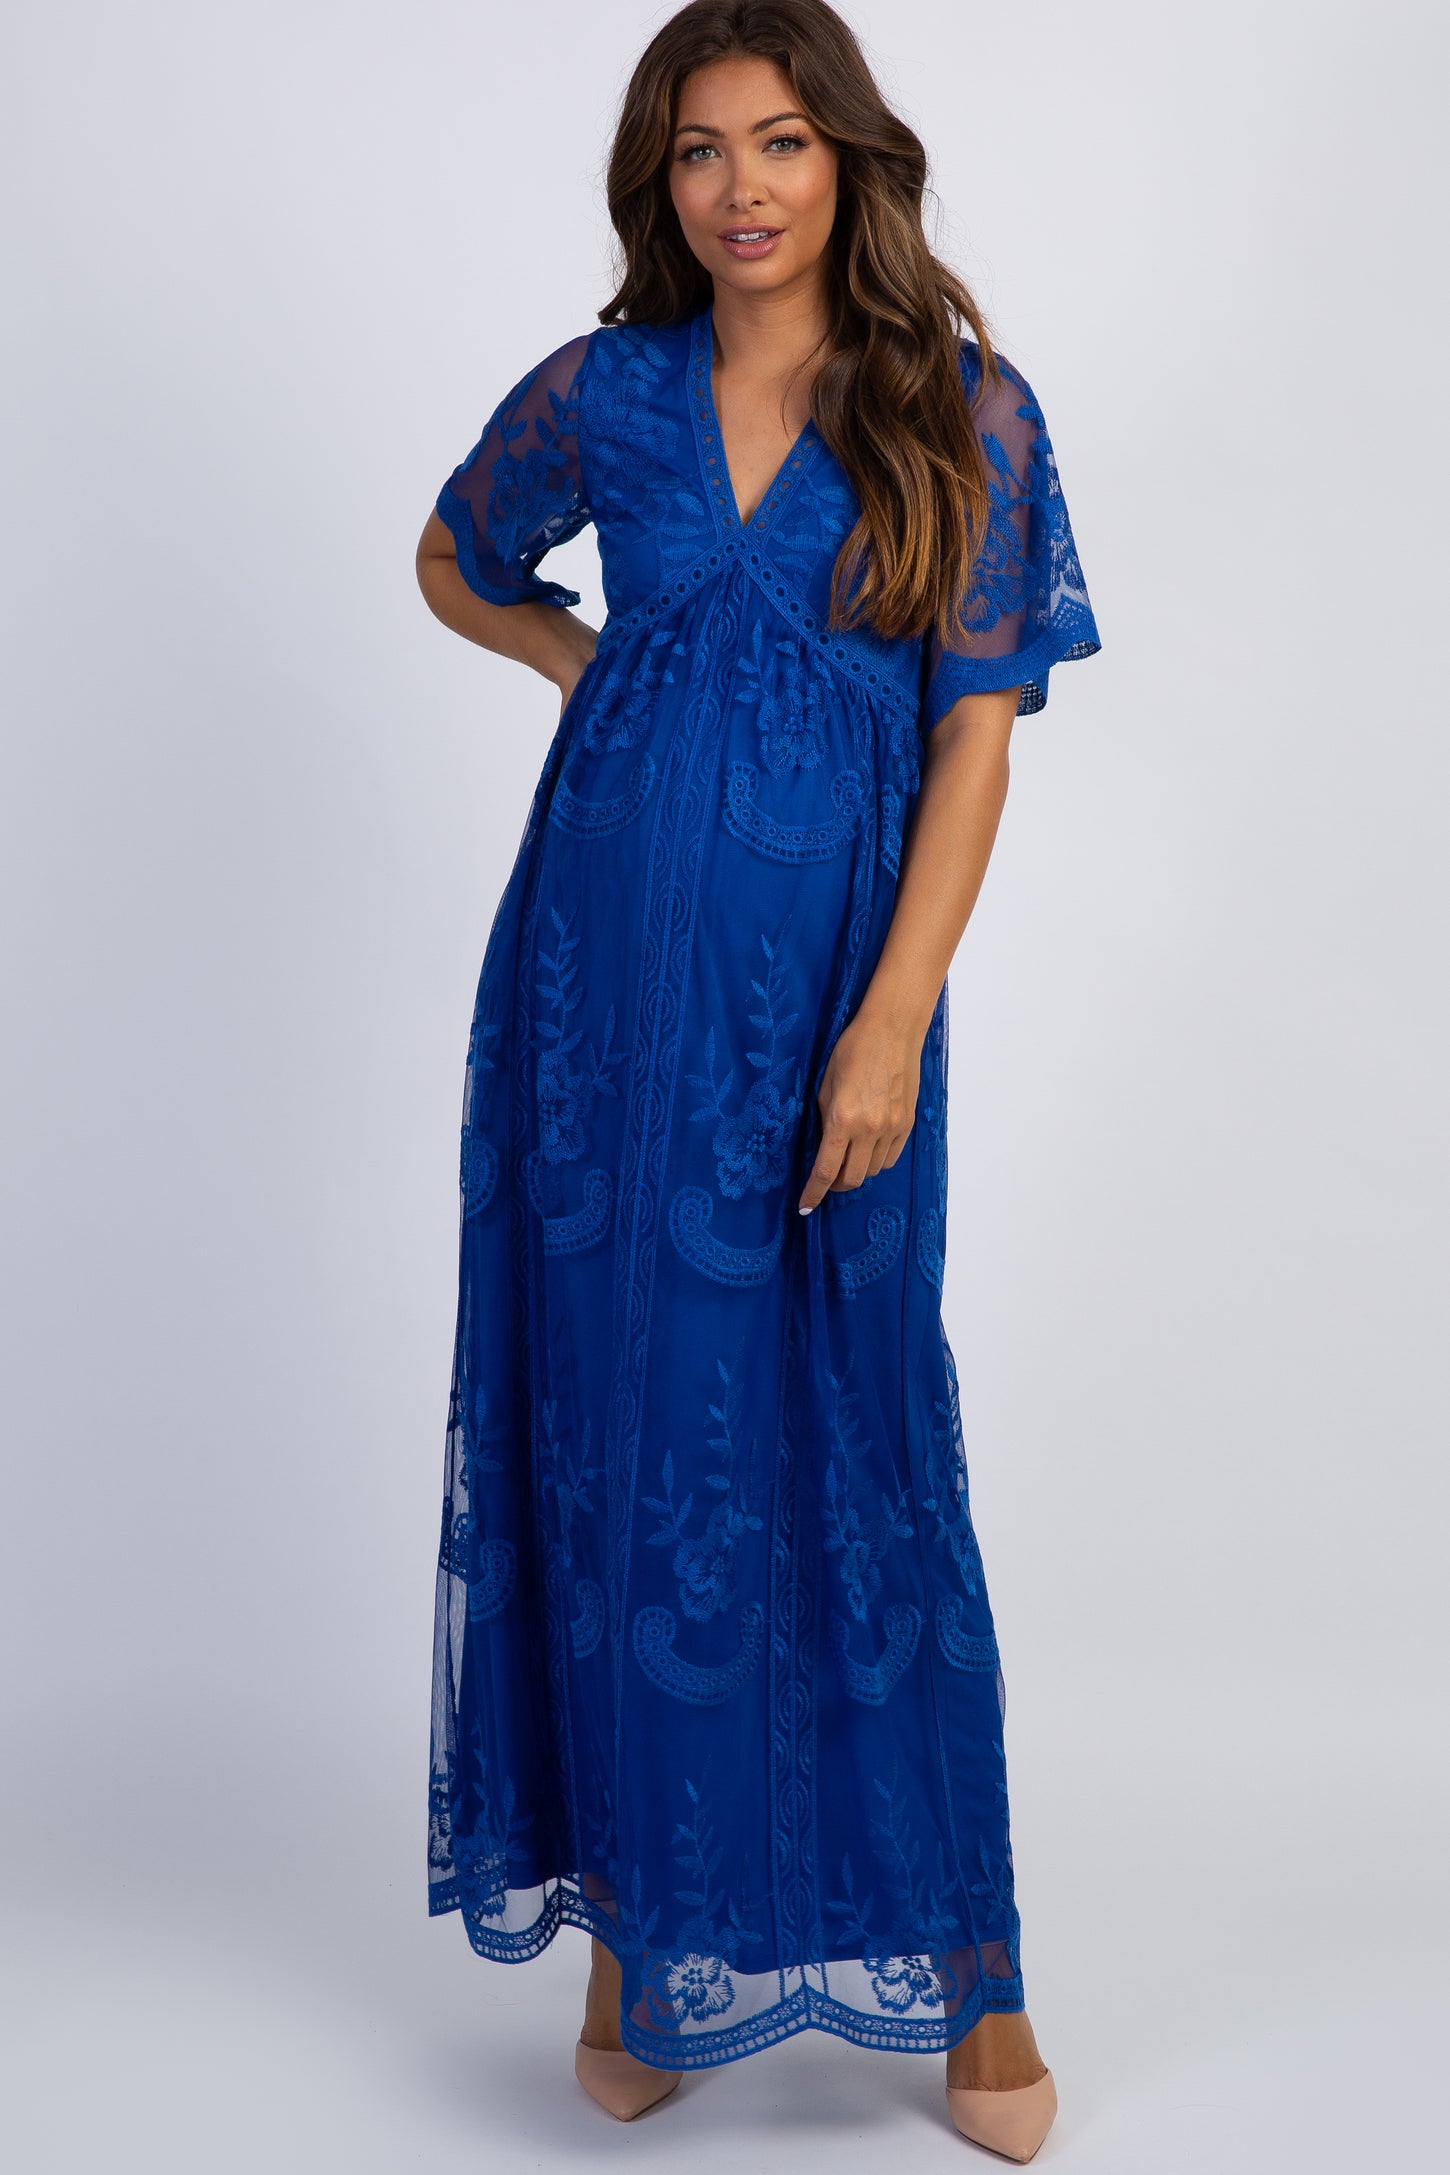 Royal Blue Lace Mesh Overlay Maternity Maxi Dress